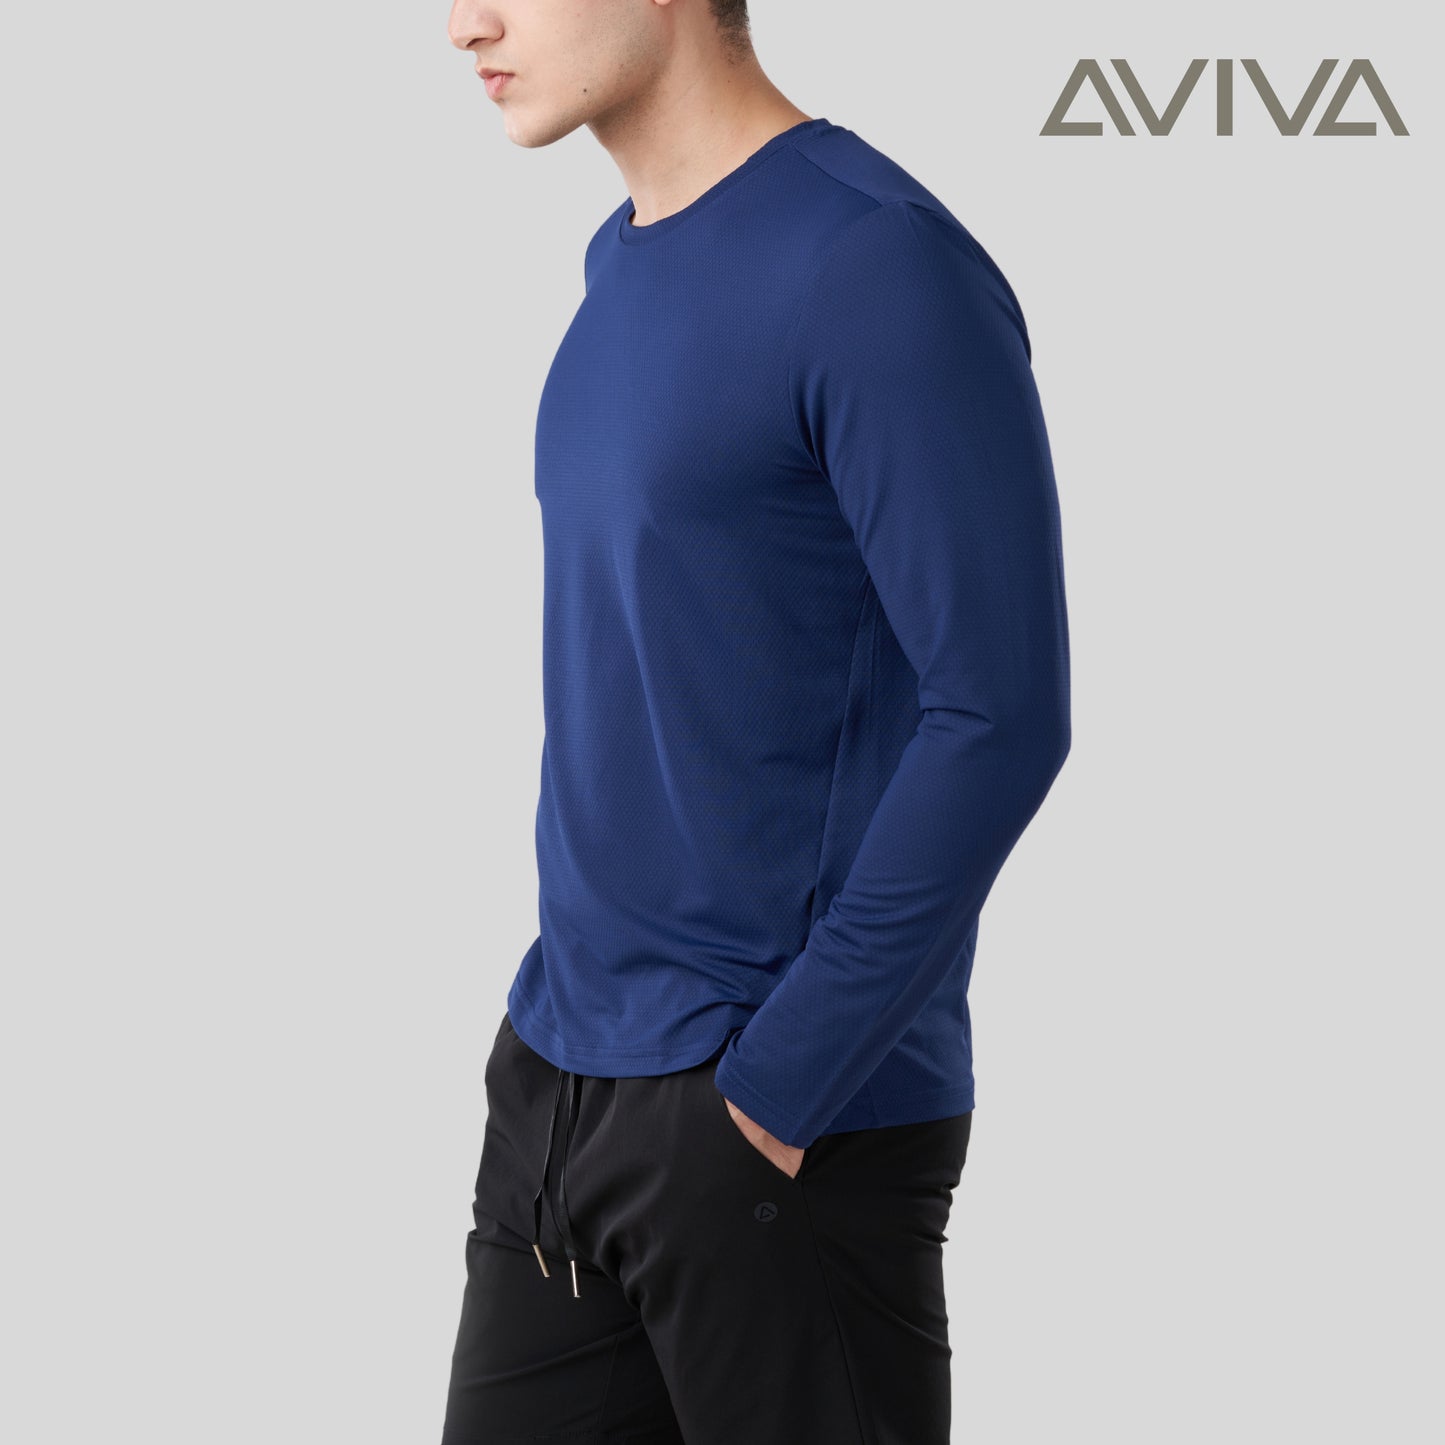 AVIVA UV Protection Men Long Sleeve Microfiber Tee ( 91-9026 )